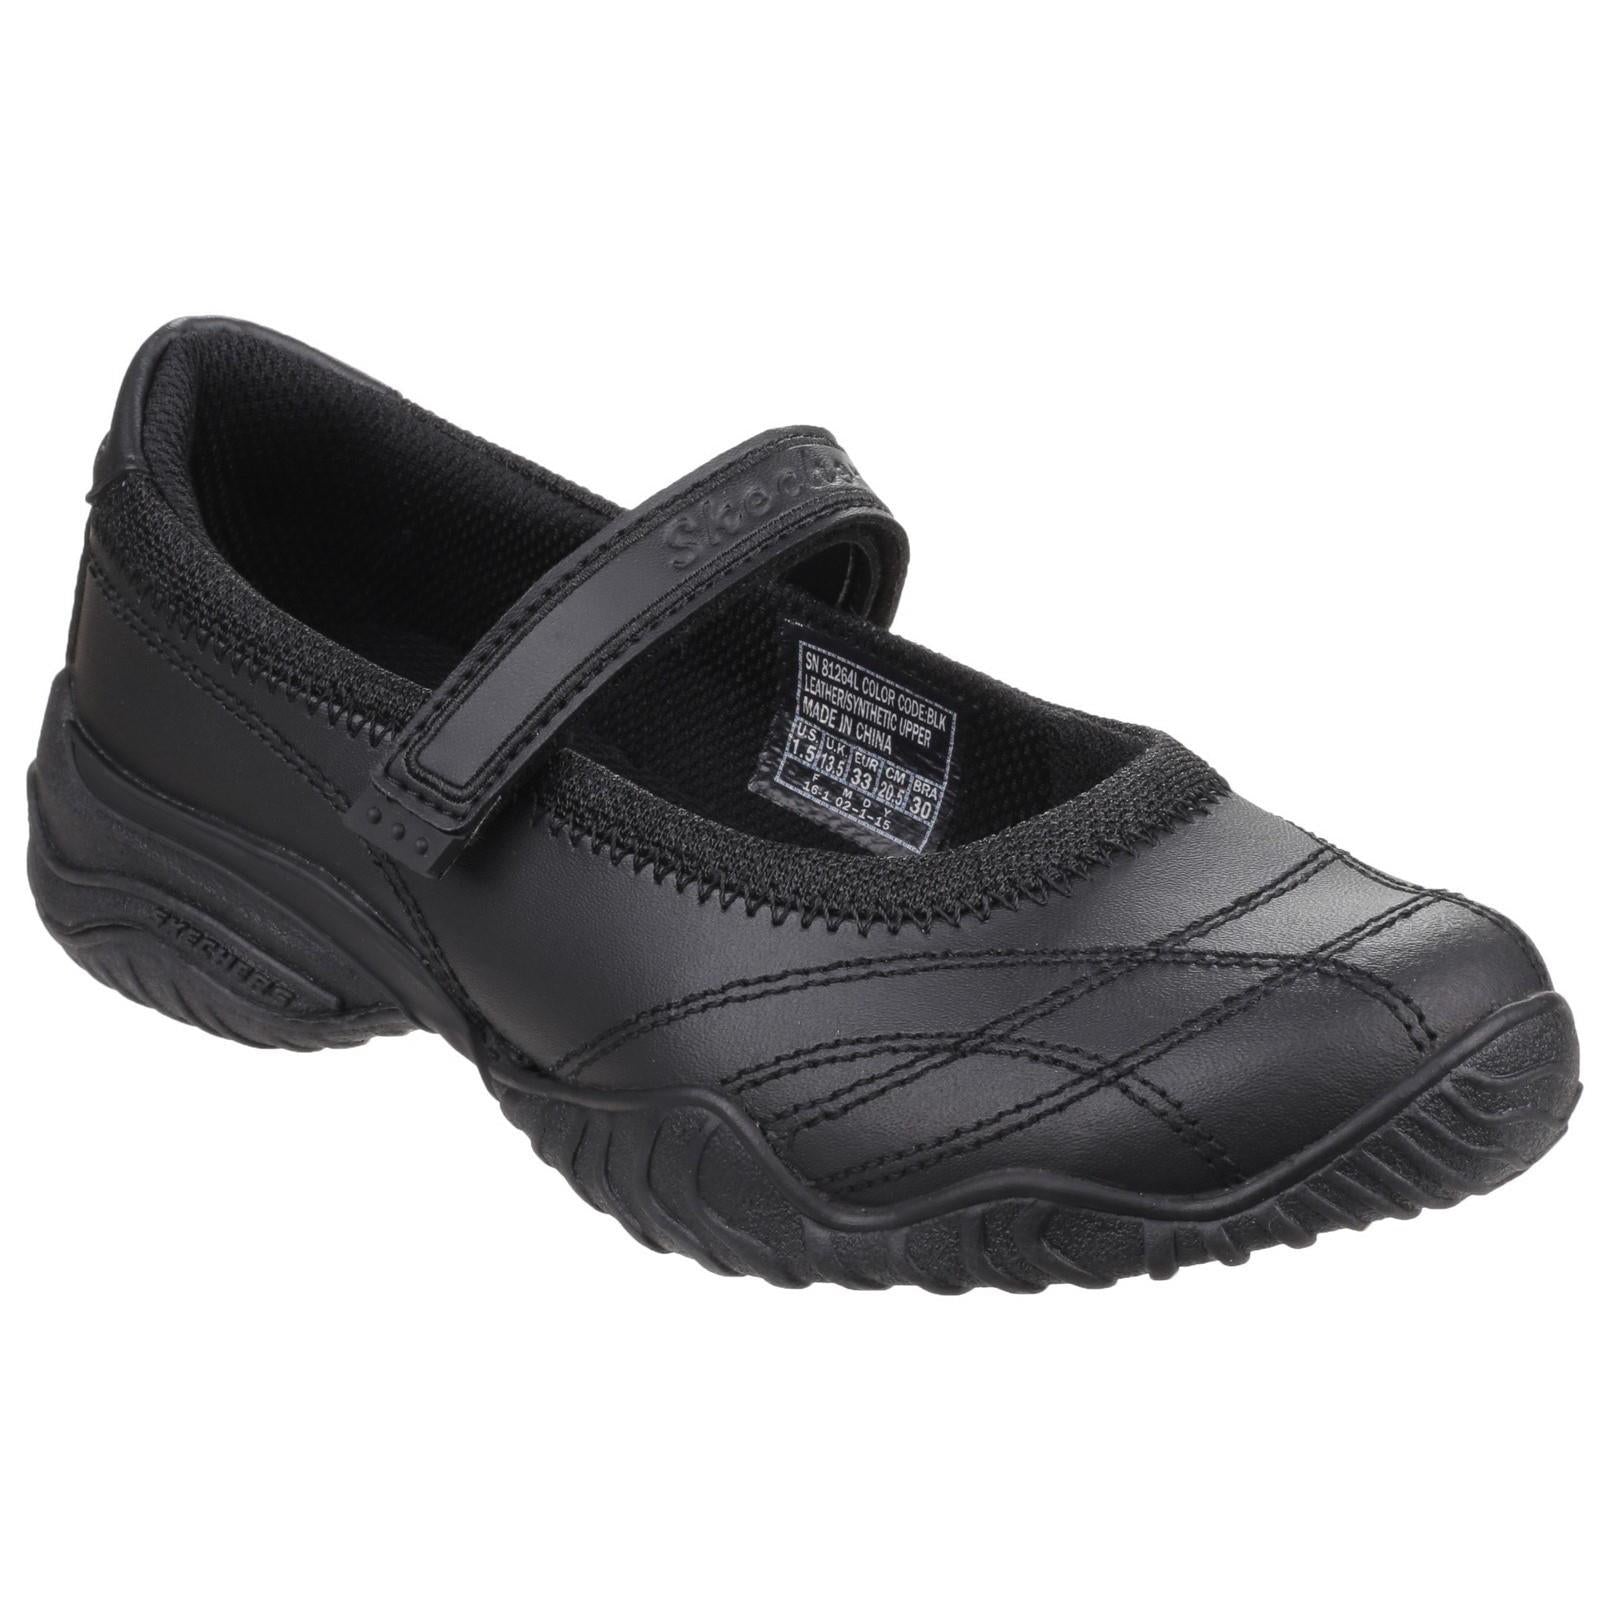 Skechers Velocity Pouty black leather girl's school shoe